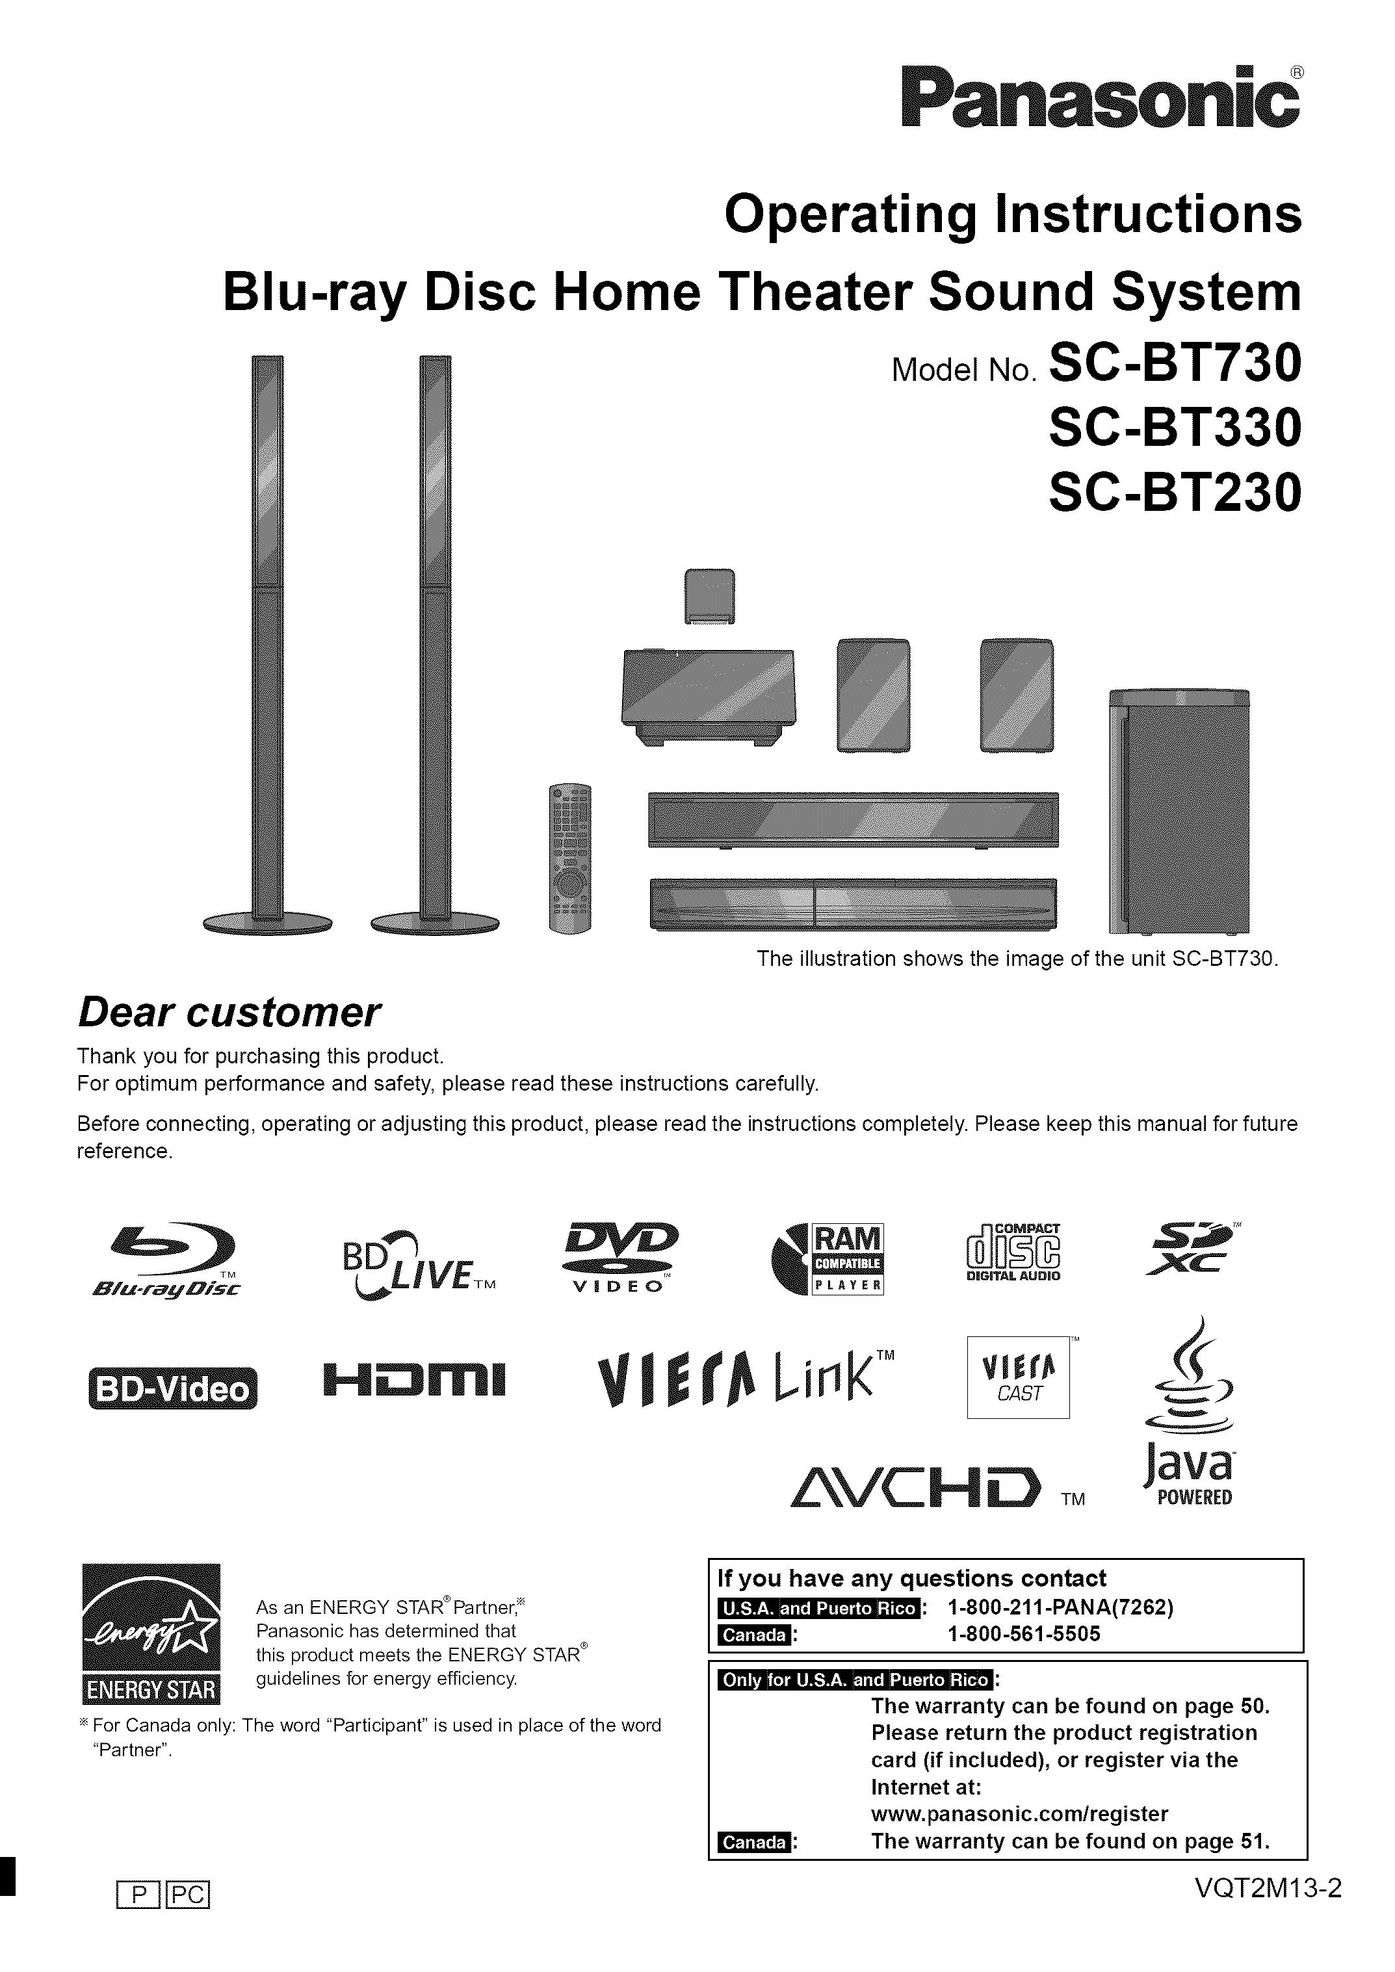 Panasonic SC-BT330 Home Theater System User Manual